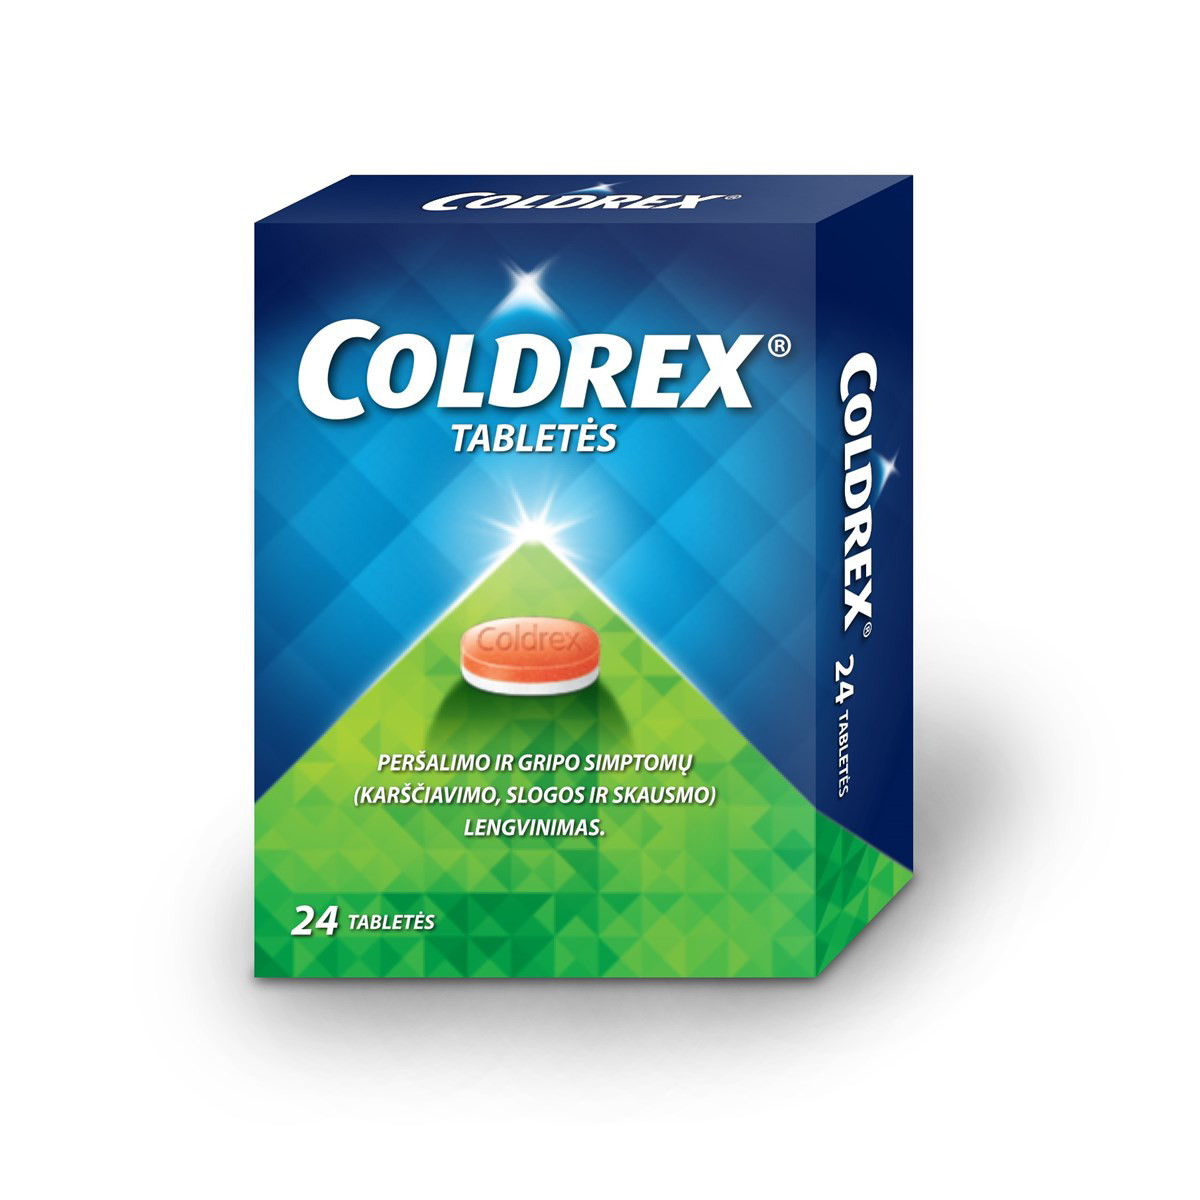 COLDREX, tabletės, N24